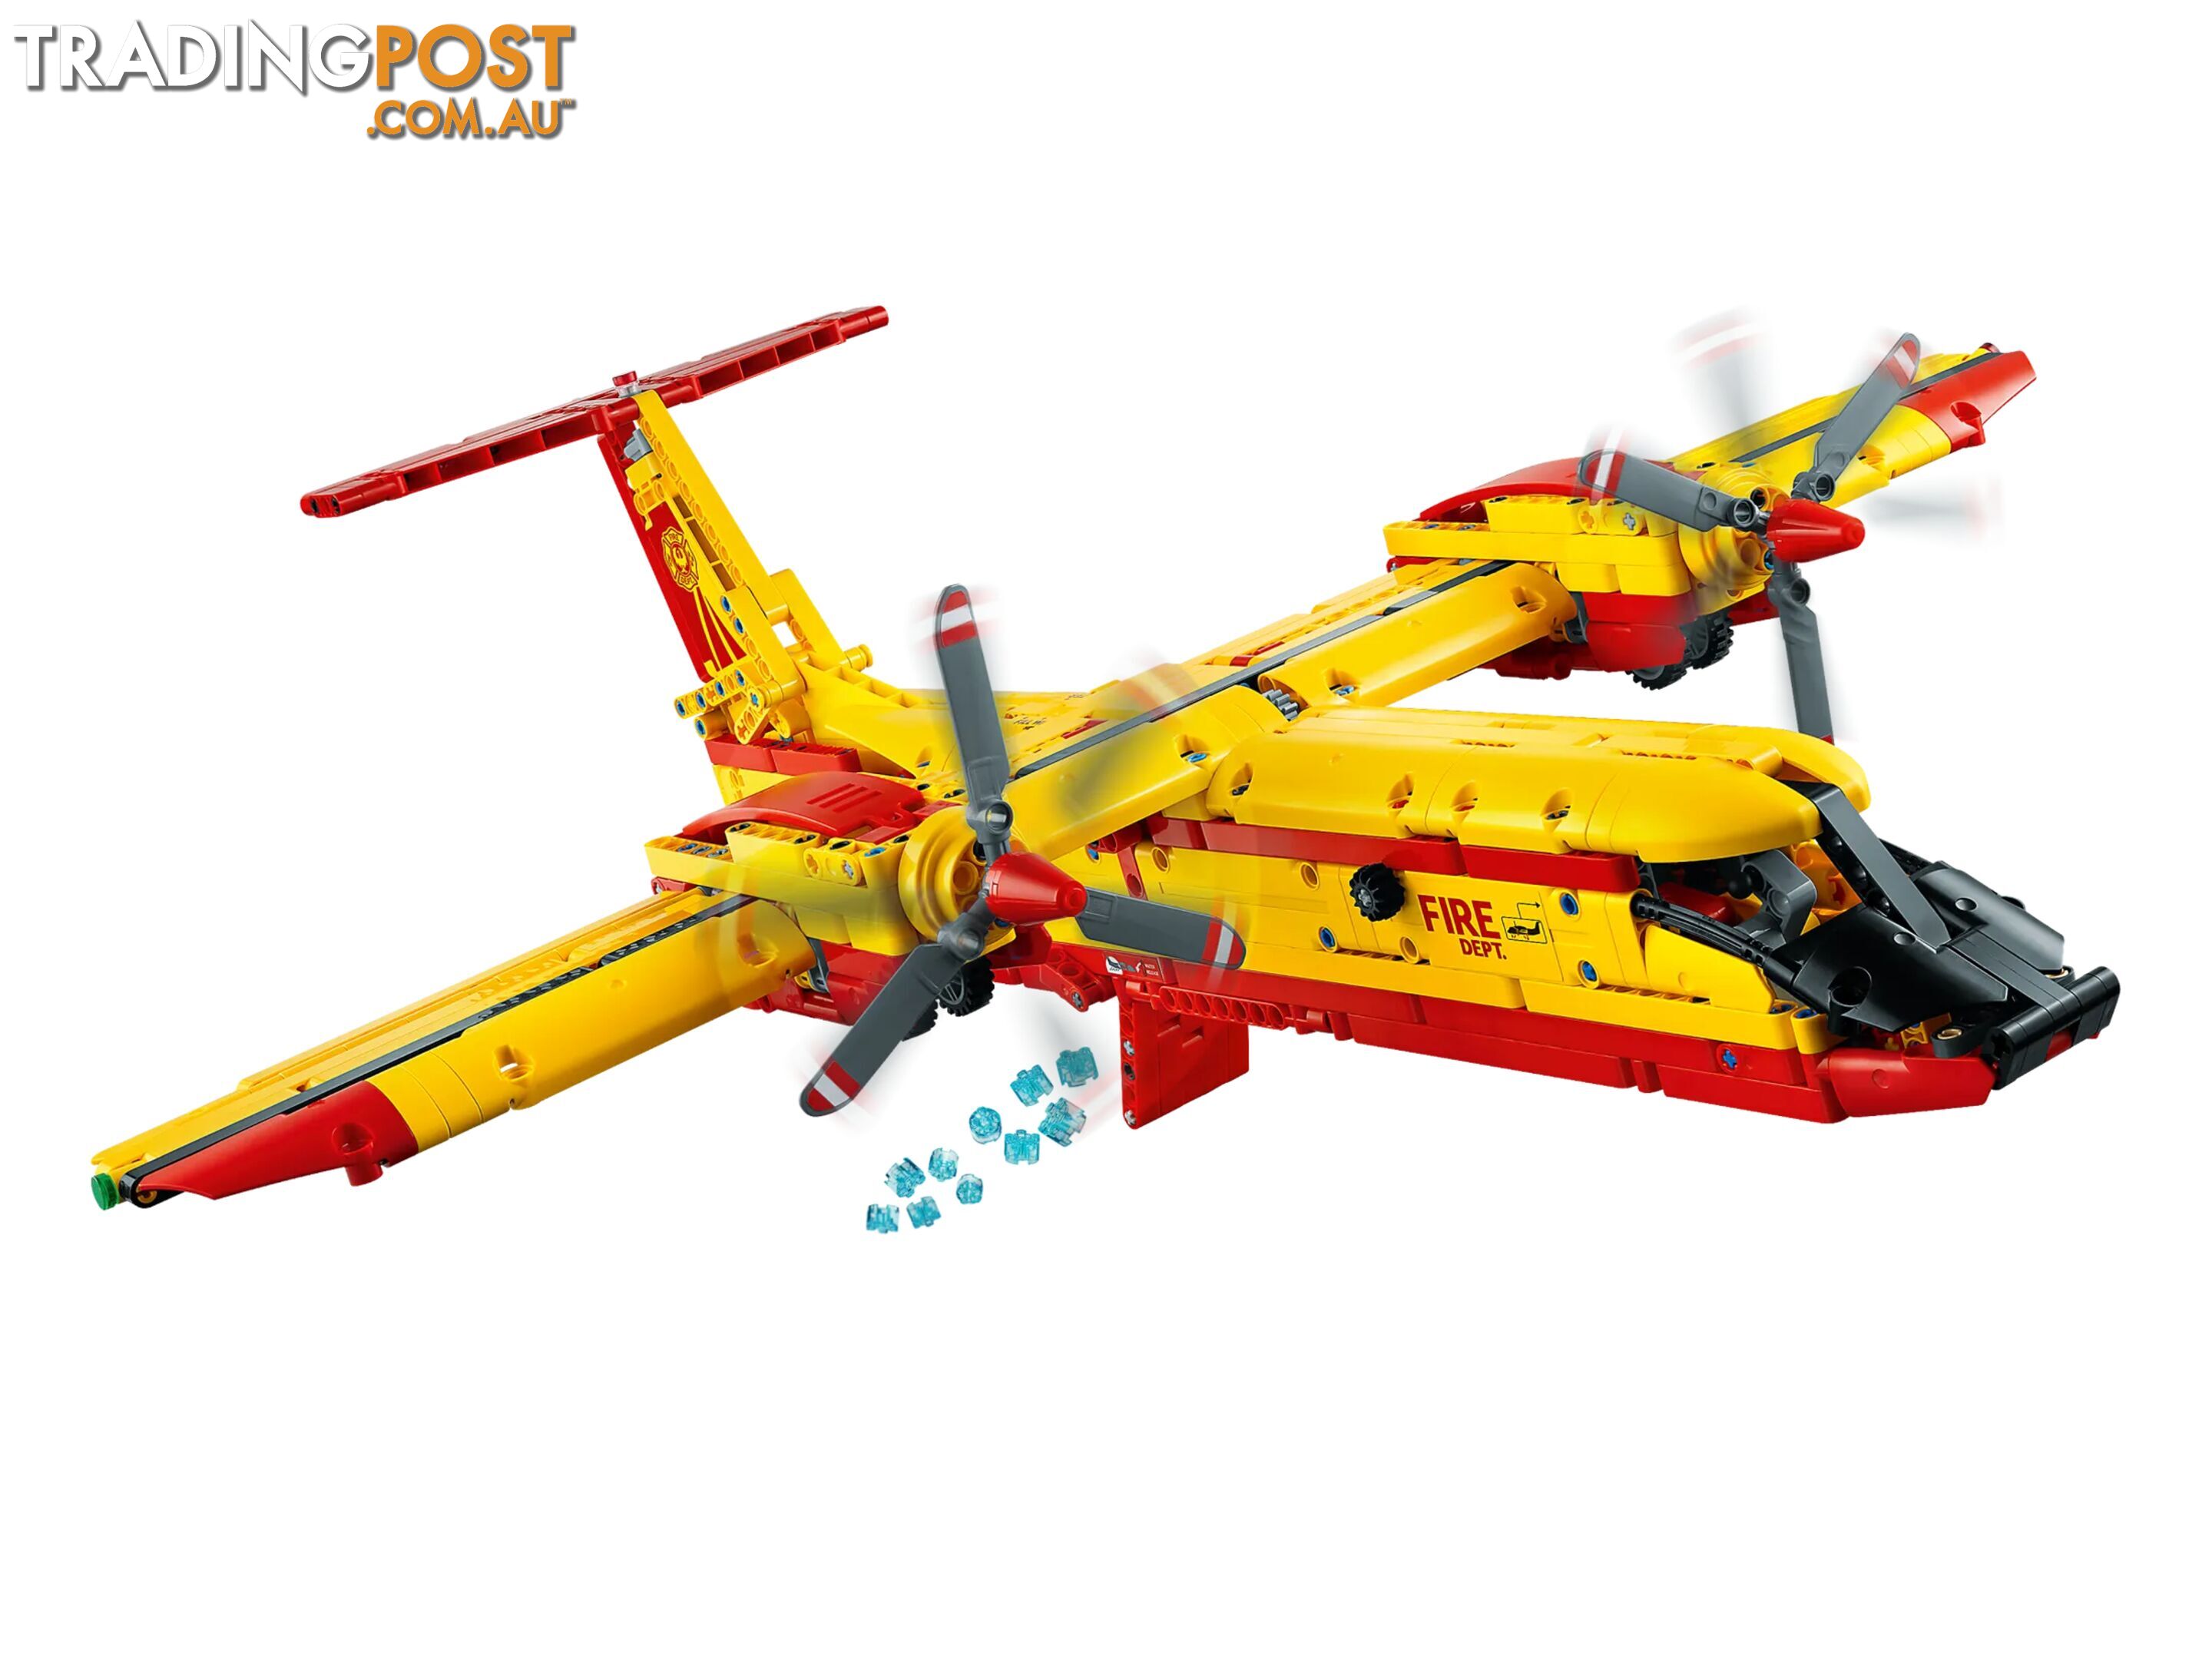 LEGO 42152 Firefighter Aircraft - Technic - 5702017425320